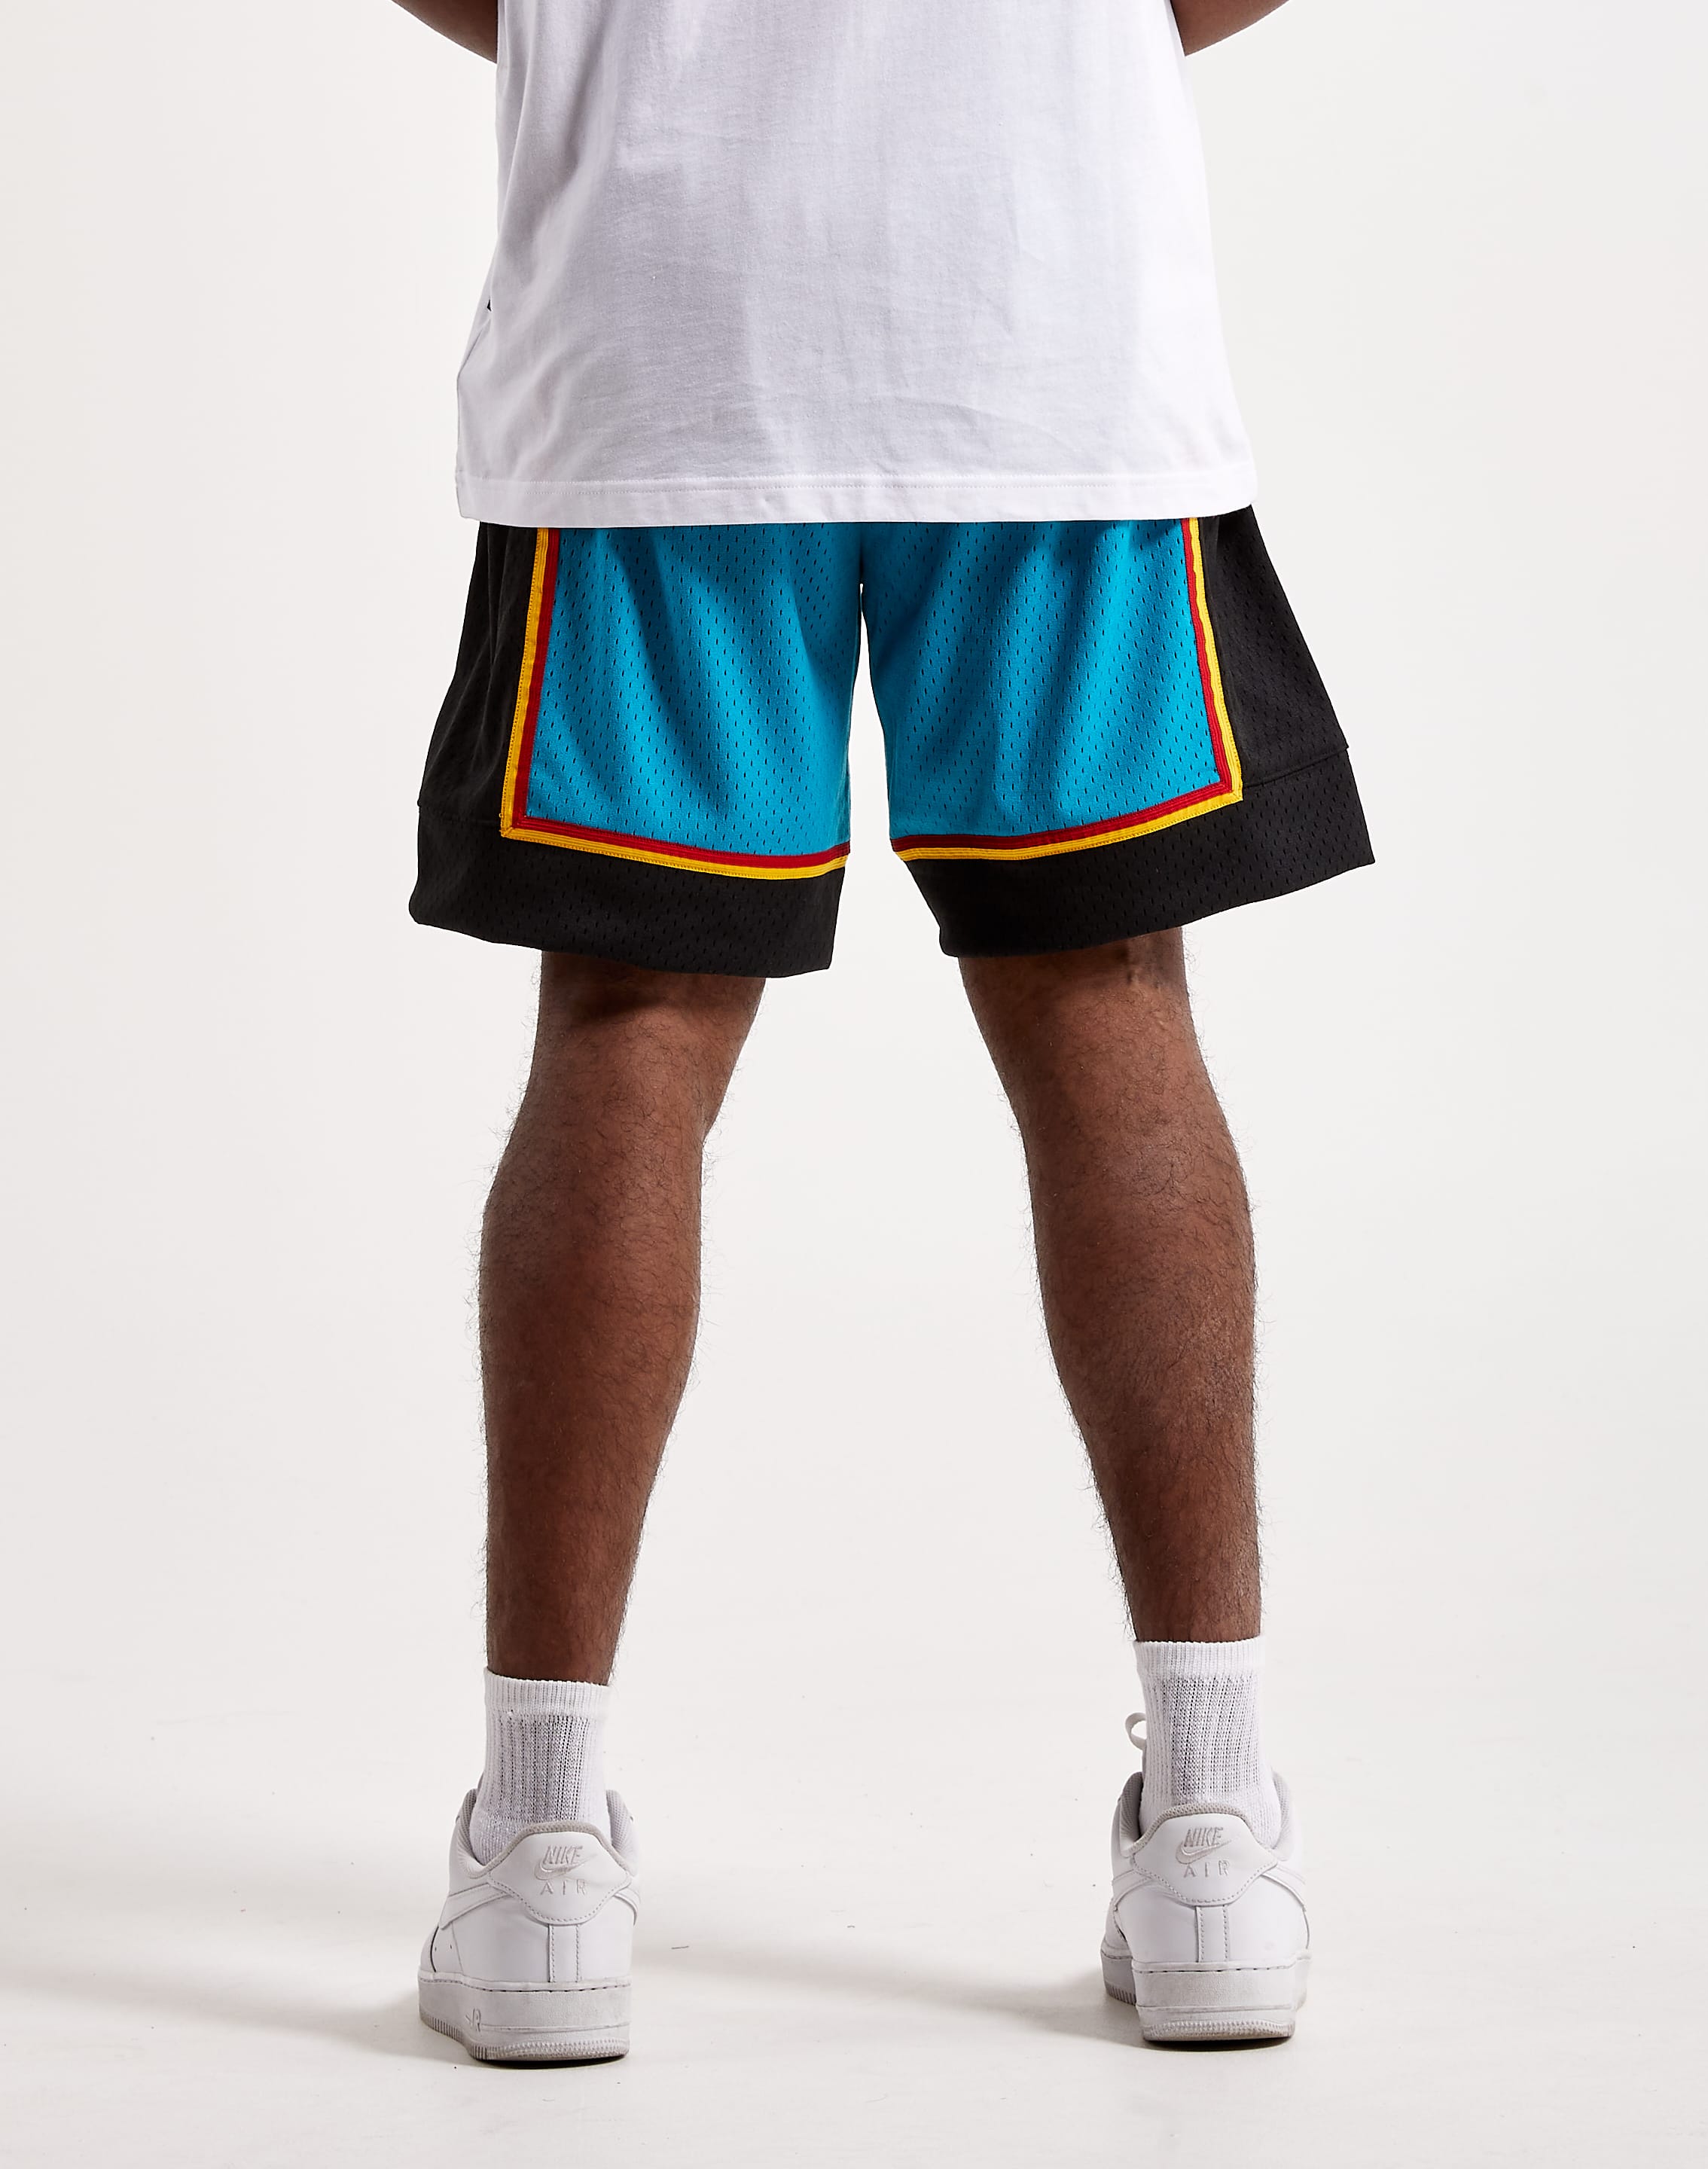 Nike Detroit Pistons Team Issue NBA Warm Up Jersey AV0960-495 Men's 2XL Tall